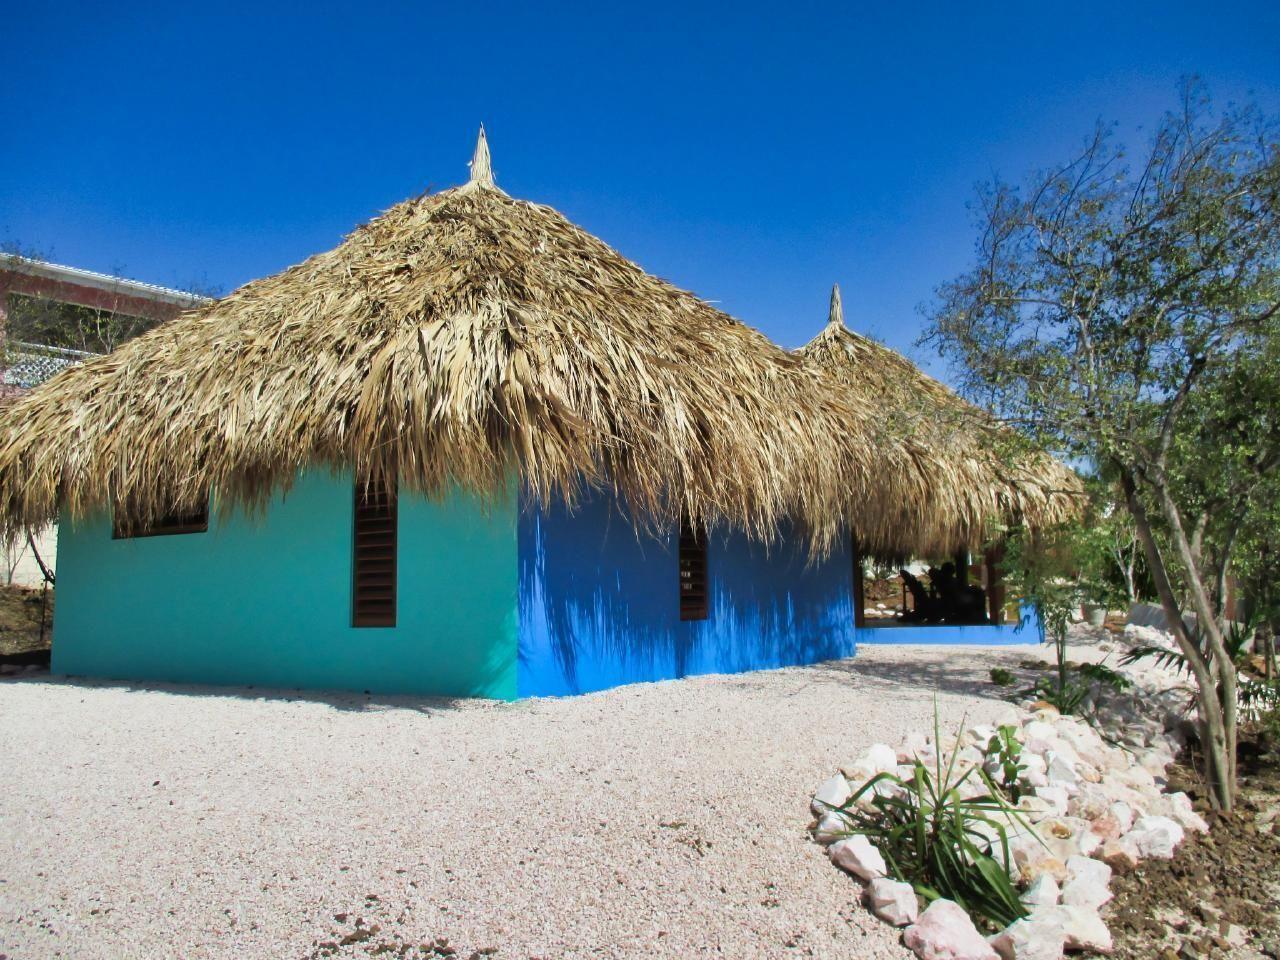 Charmantes Ferienhaus "Palapino" mit Rel  in Mittelamerika und Karibik